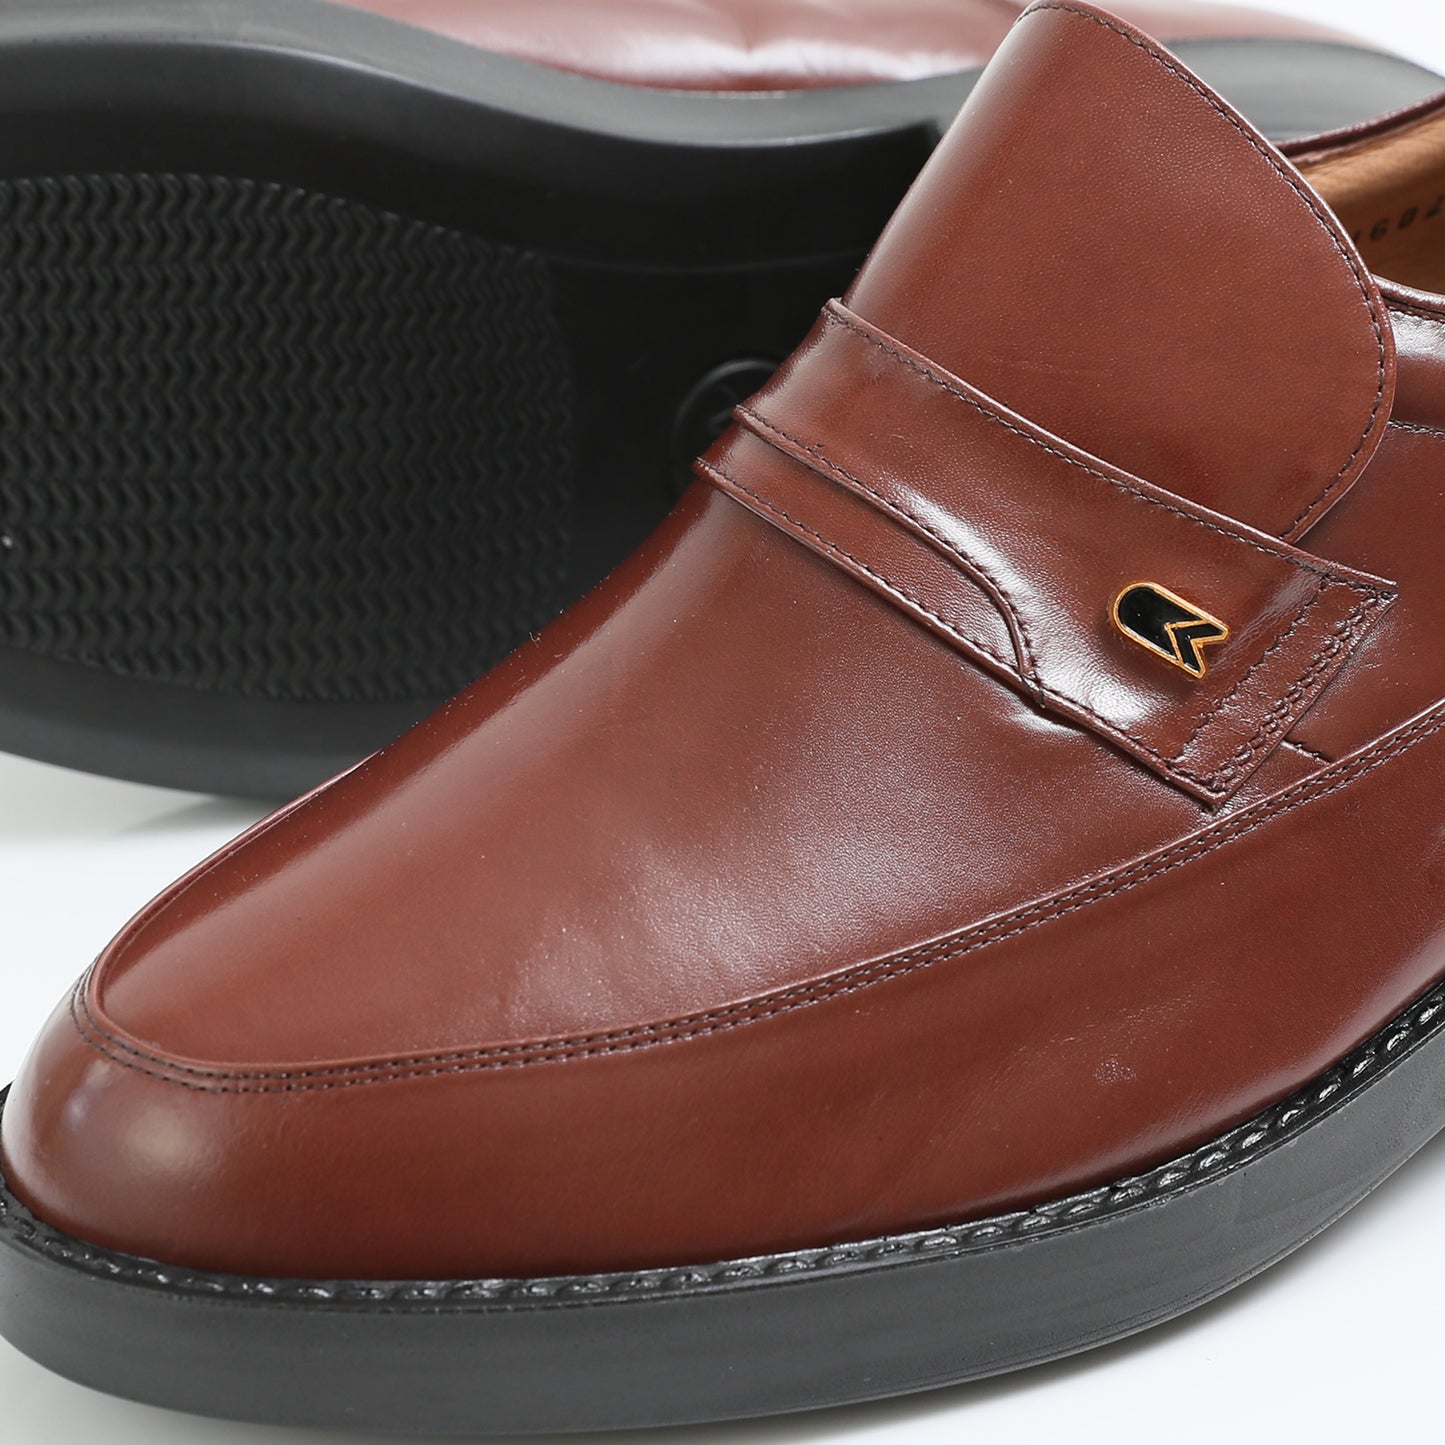 Men's Elevator Shoes Height Increasing 2.76" Taller Slip on U-tip Dress Shoes Kangaroo Leather No. 234